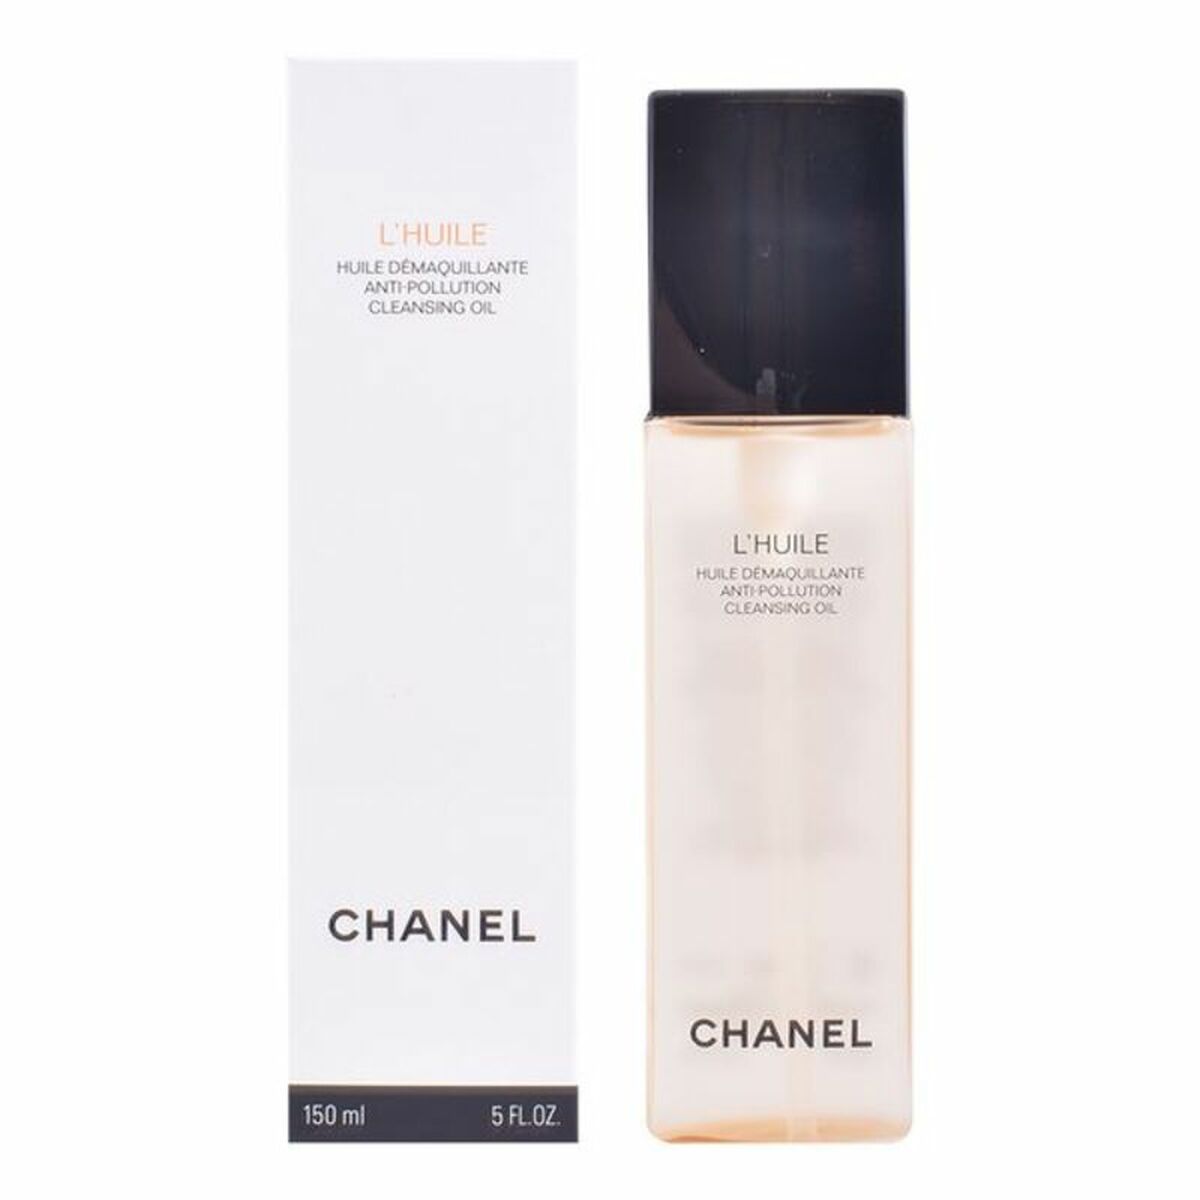 Huile démaquillante L'huile Chanel (150 ml)